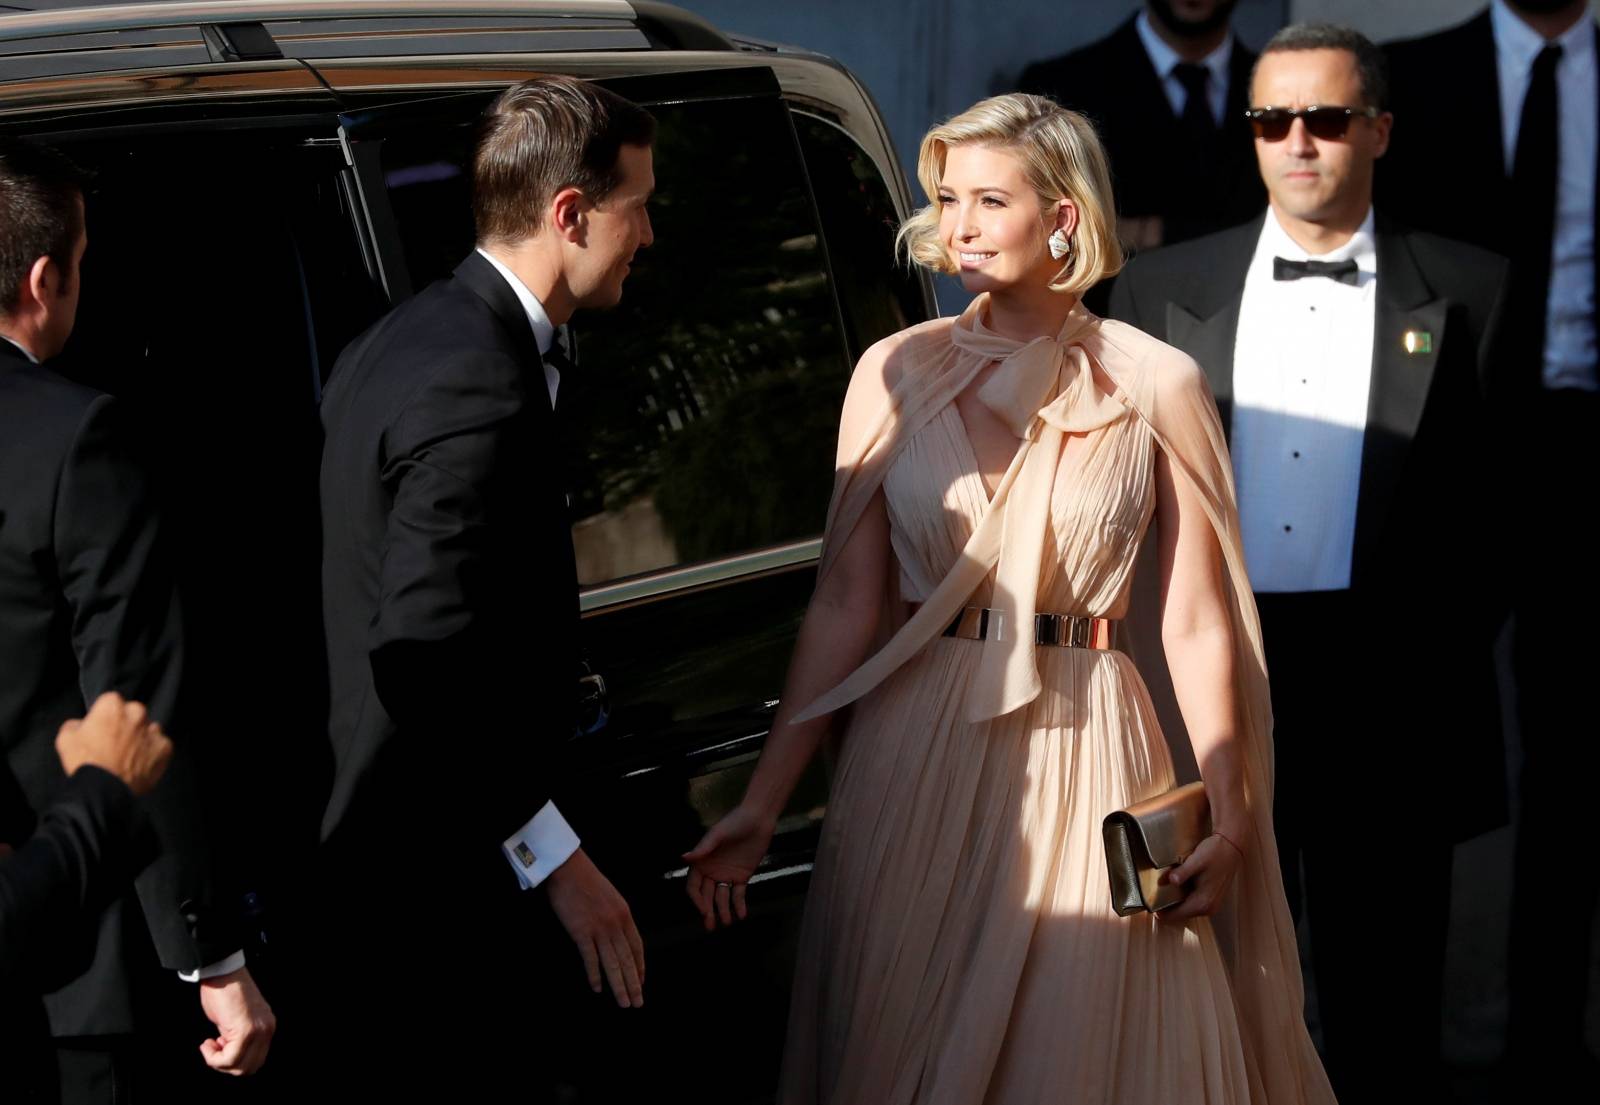 Ivanka Trump and her husband Senior Advisor to the President of the United States Jared Kushner  arrive to attend the wedding of fashion designer Misha Nonoo at Villa Aurelia in Rome